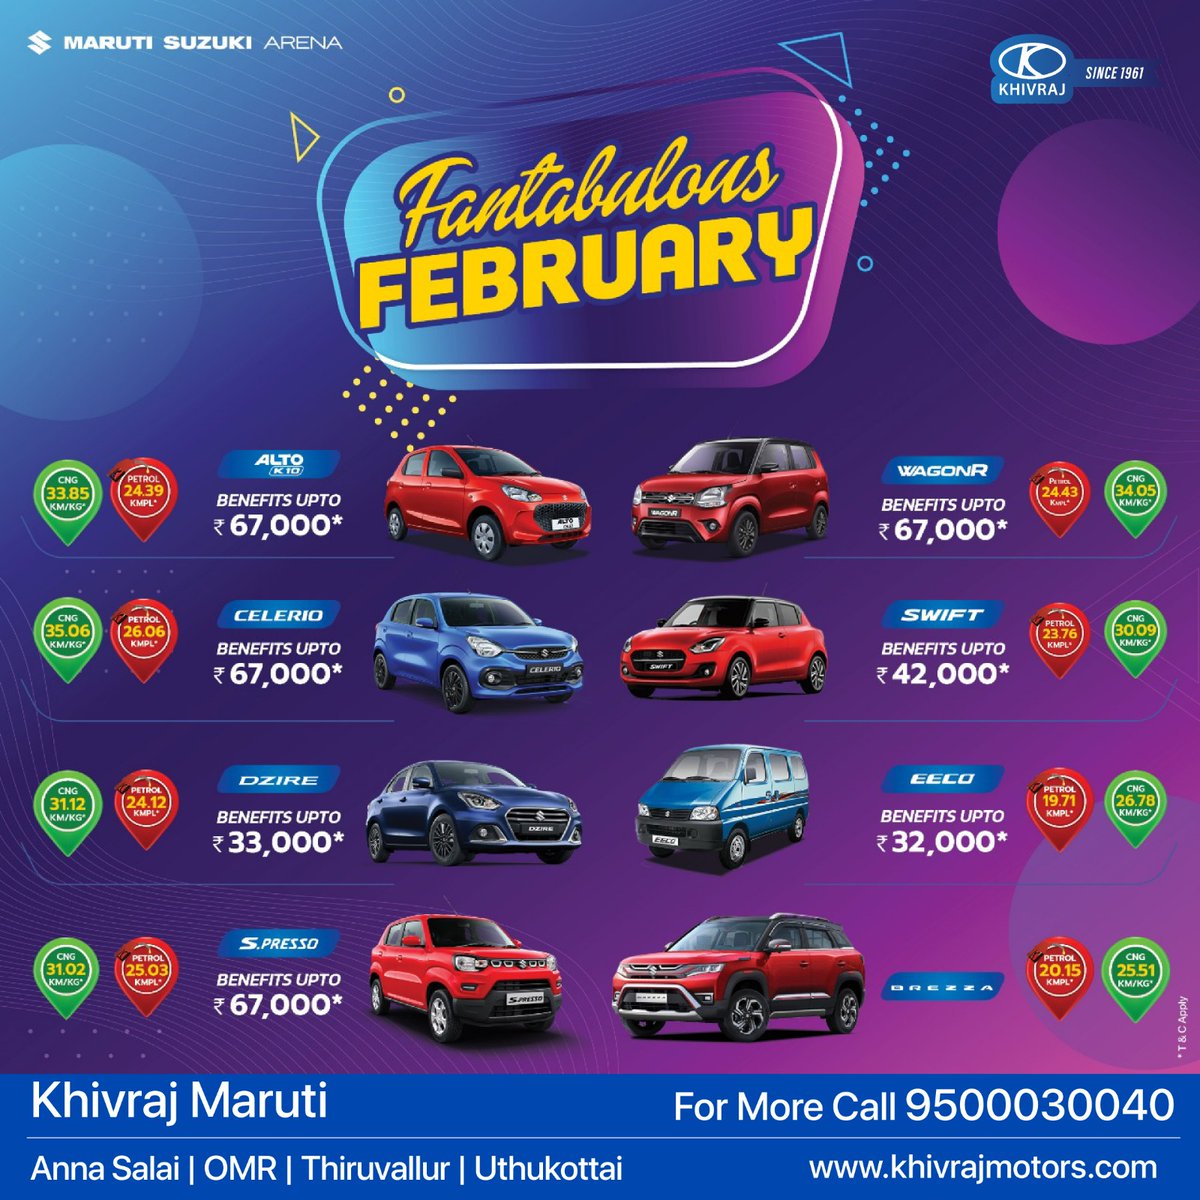 🌟 Get ready to rev up your savings and drive home in style this February with Khivraj Maruti! 🌟

Call us : 9500030040

#KhivrajMaruti #FebruarySale #FantabulousDeals
#SavingsOnWheels #marutisuzuki